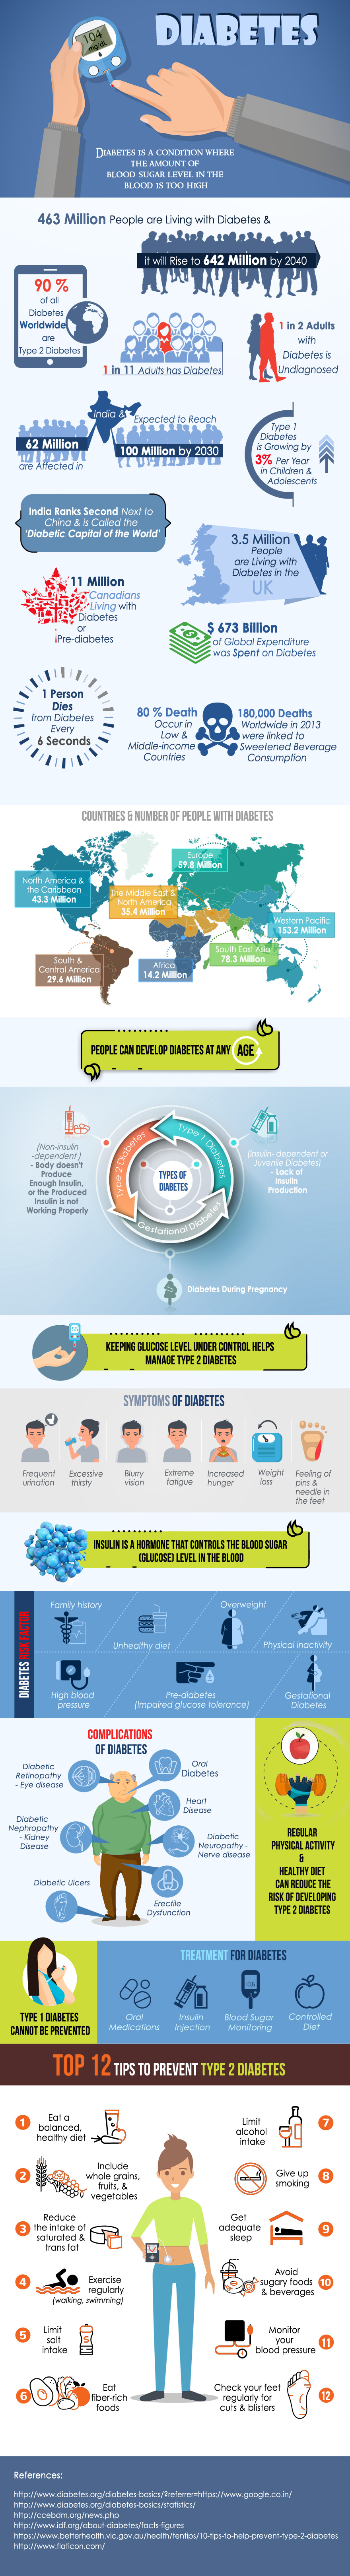 Infographic on Diabetes